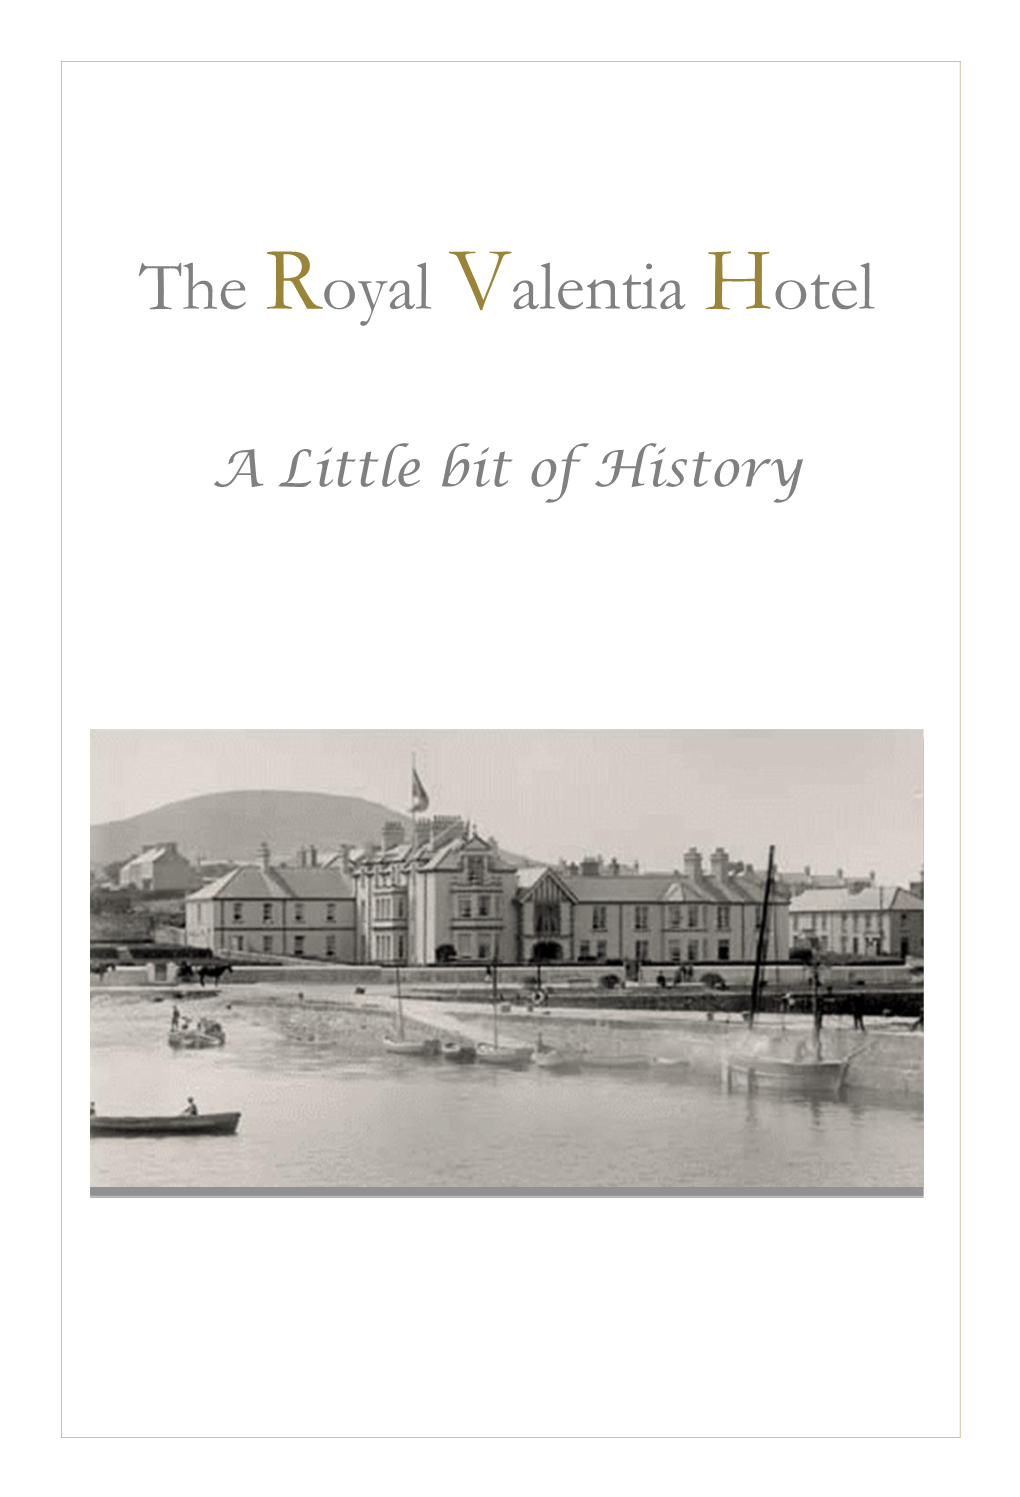 History of the Royal Valentia Hotel